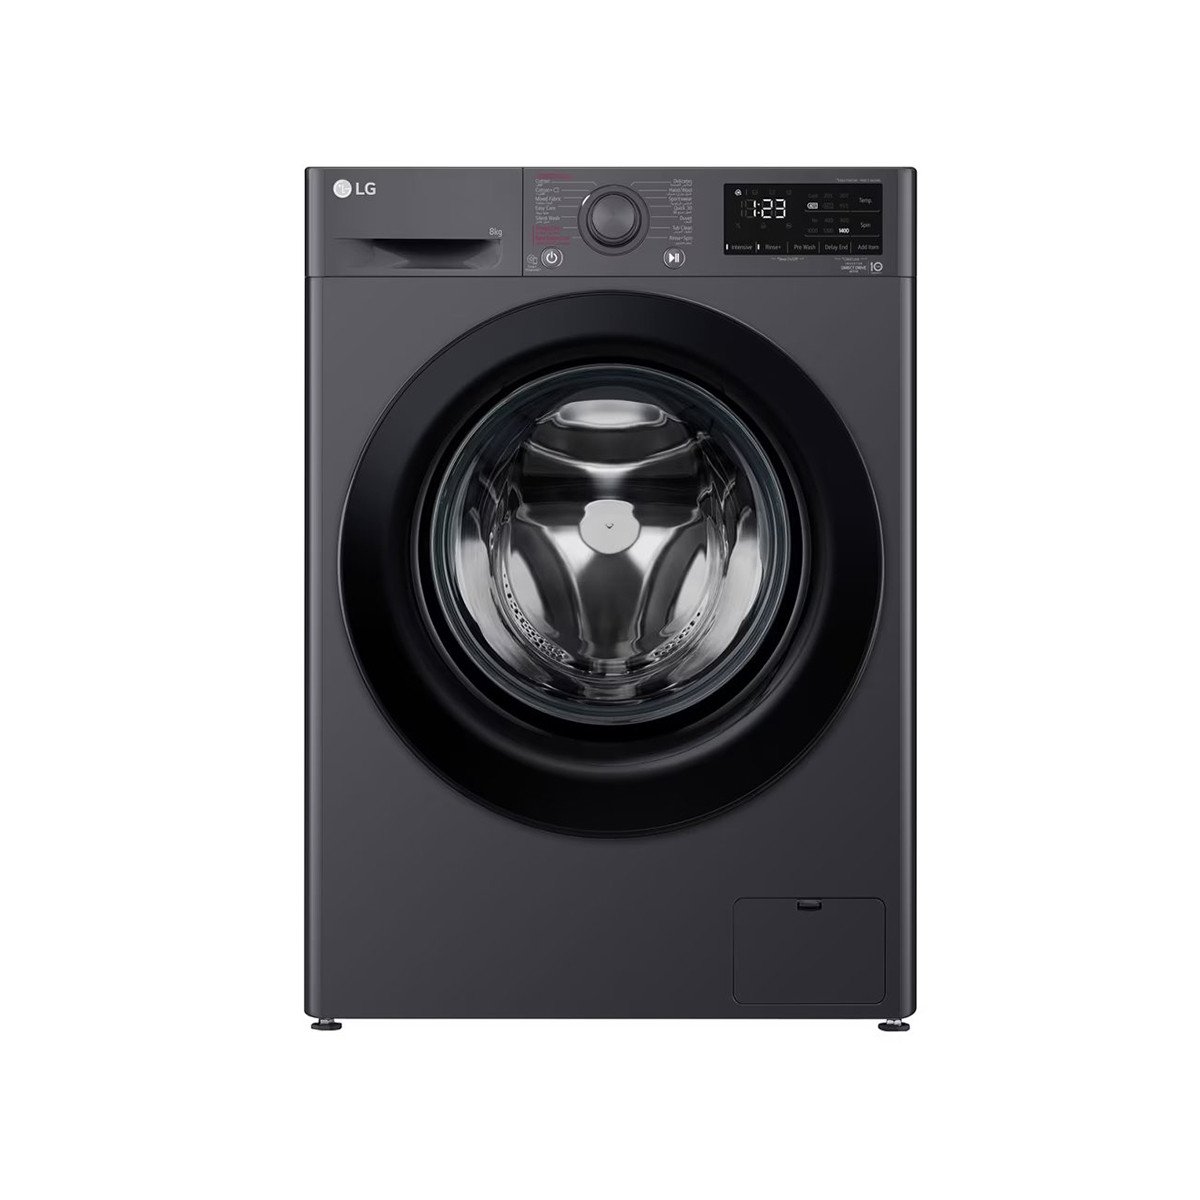 LG - Washing Machine 8 Kg Vivace Washing Machine, with AI DD technology M/Black